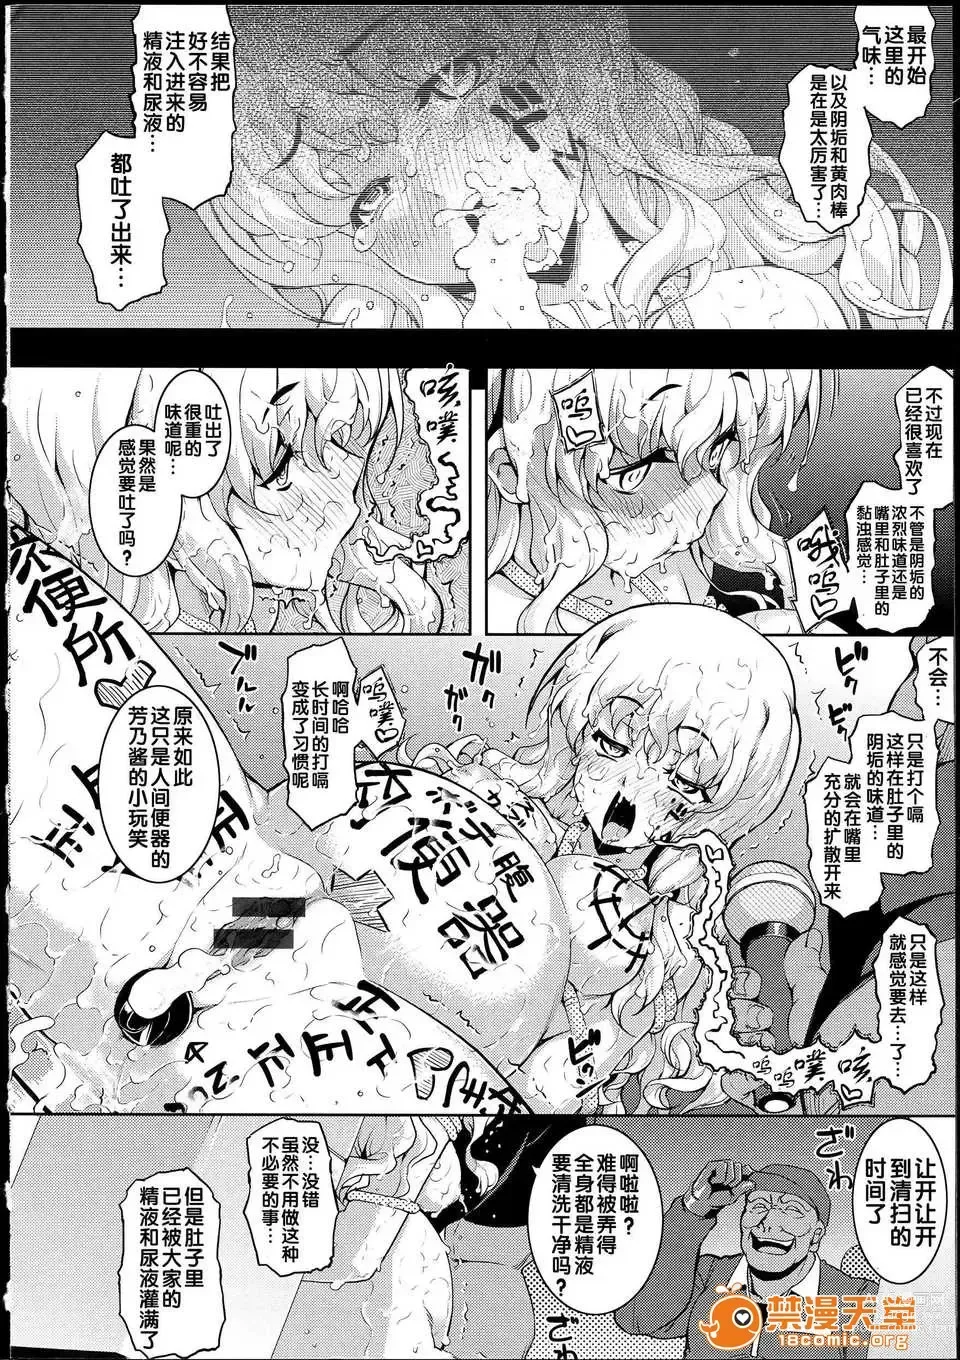 Page 221 of manga NTR2